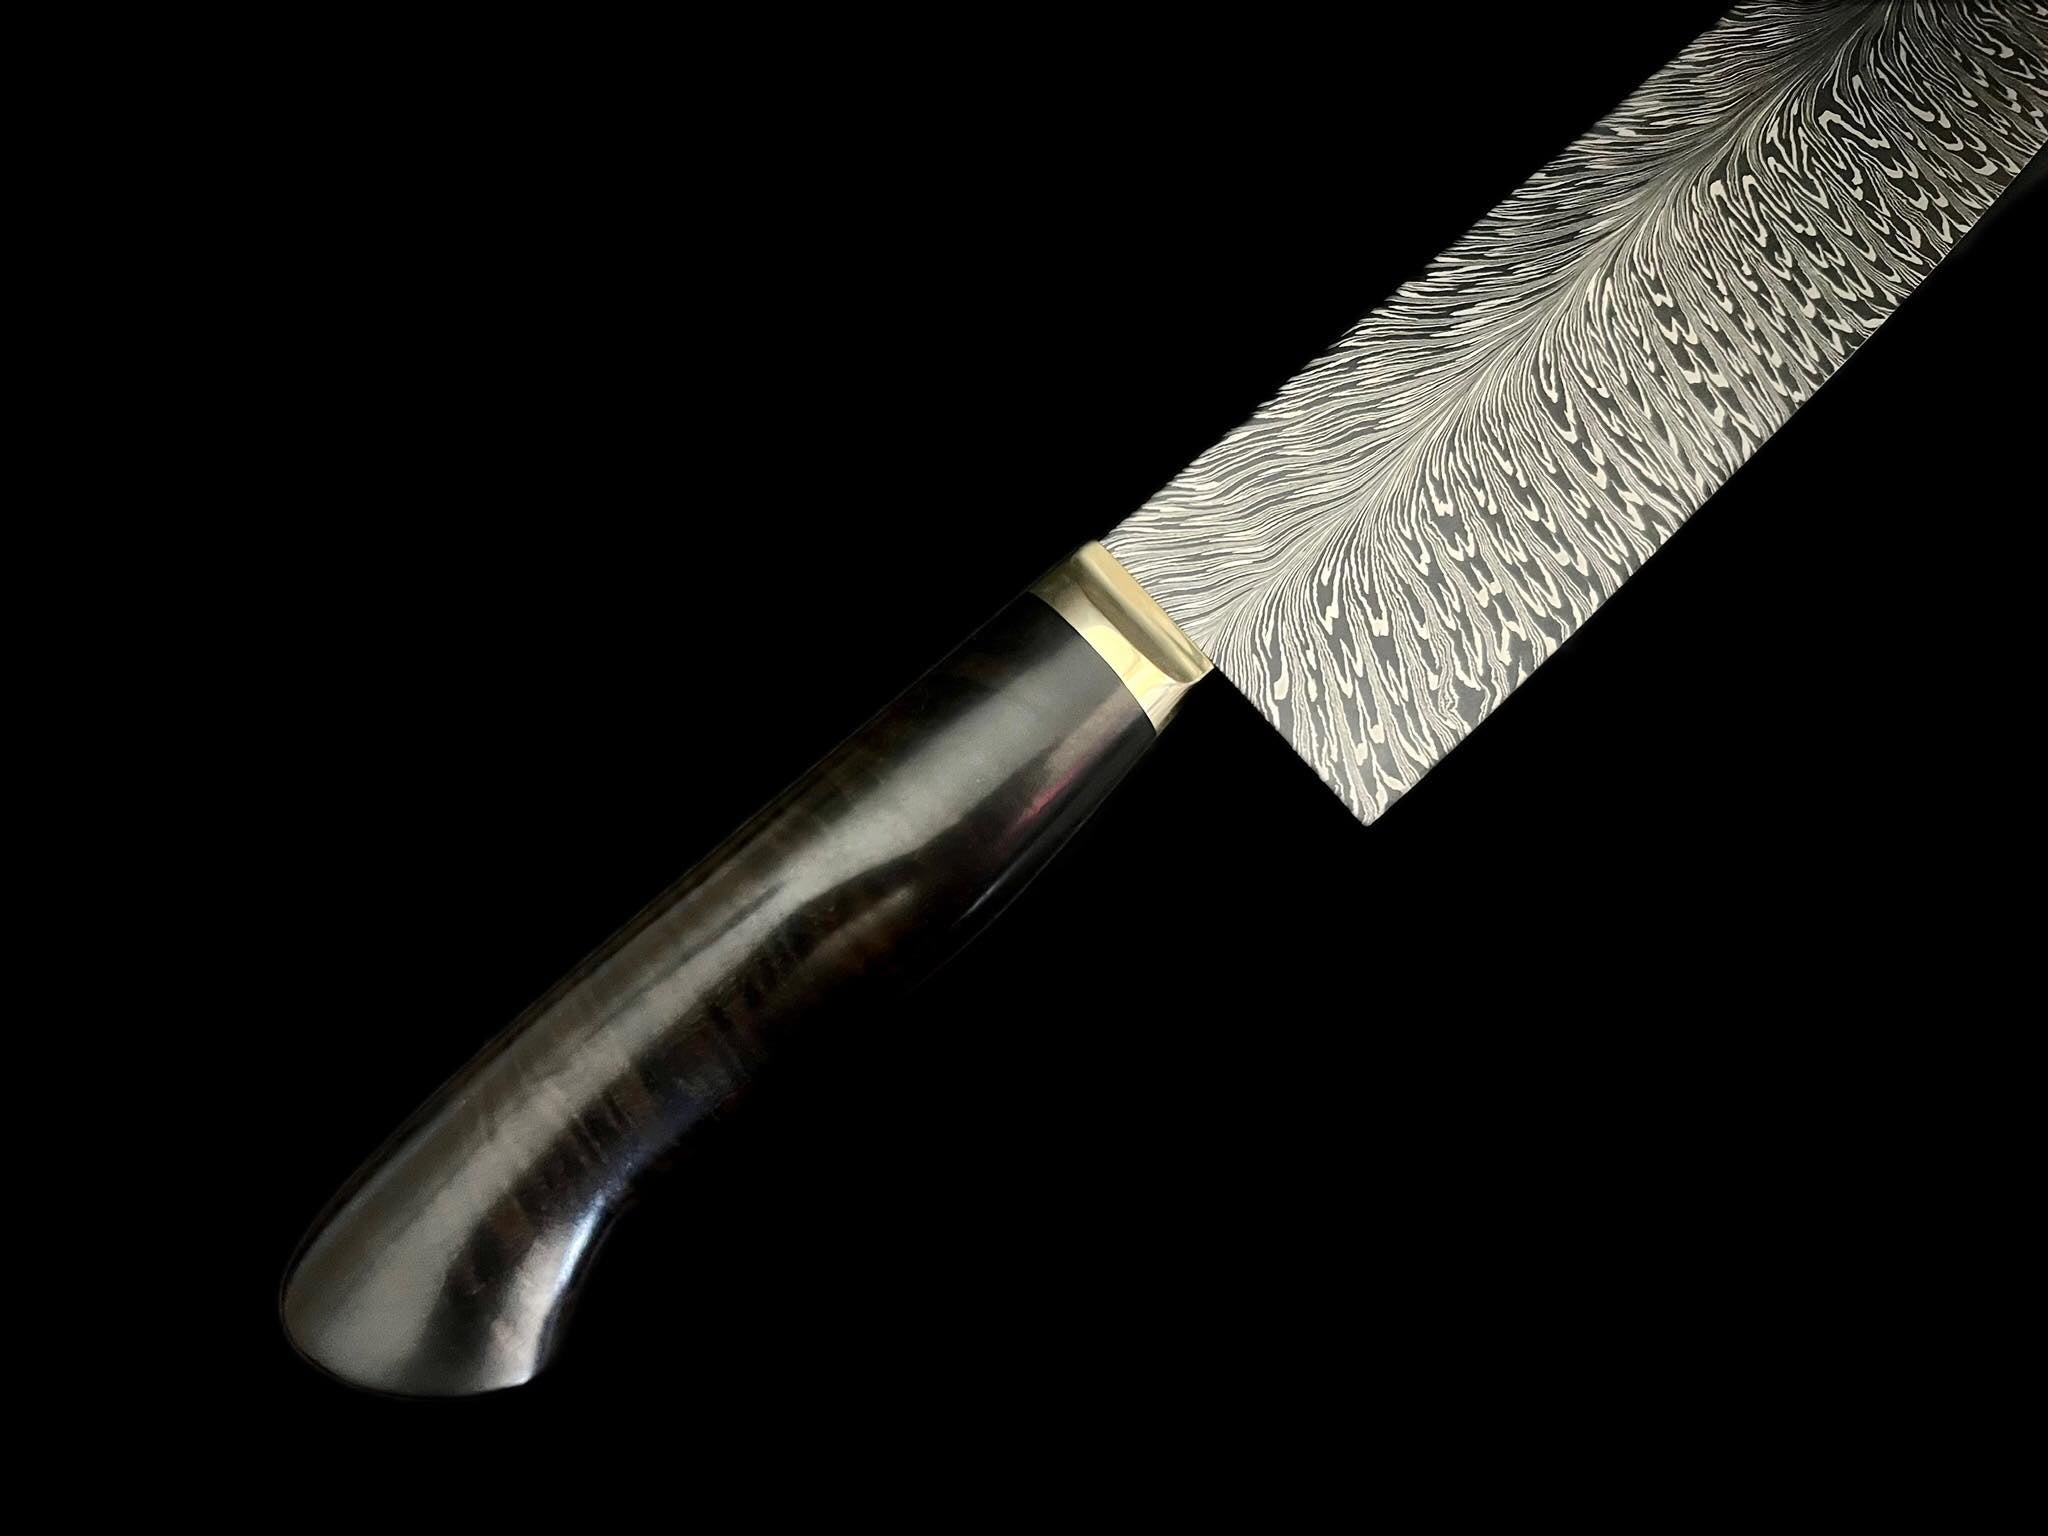 Pattern Welded Chef's Knife